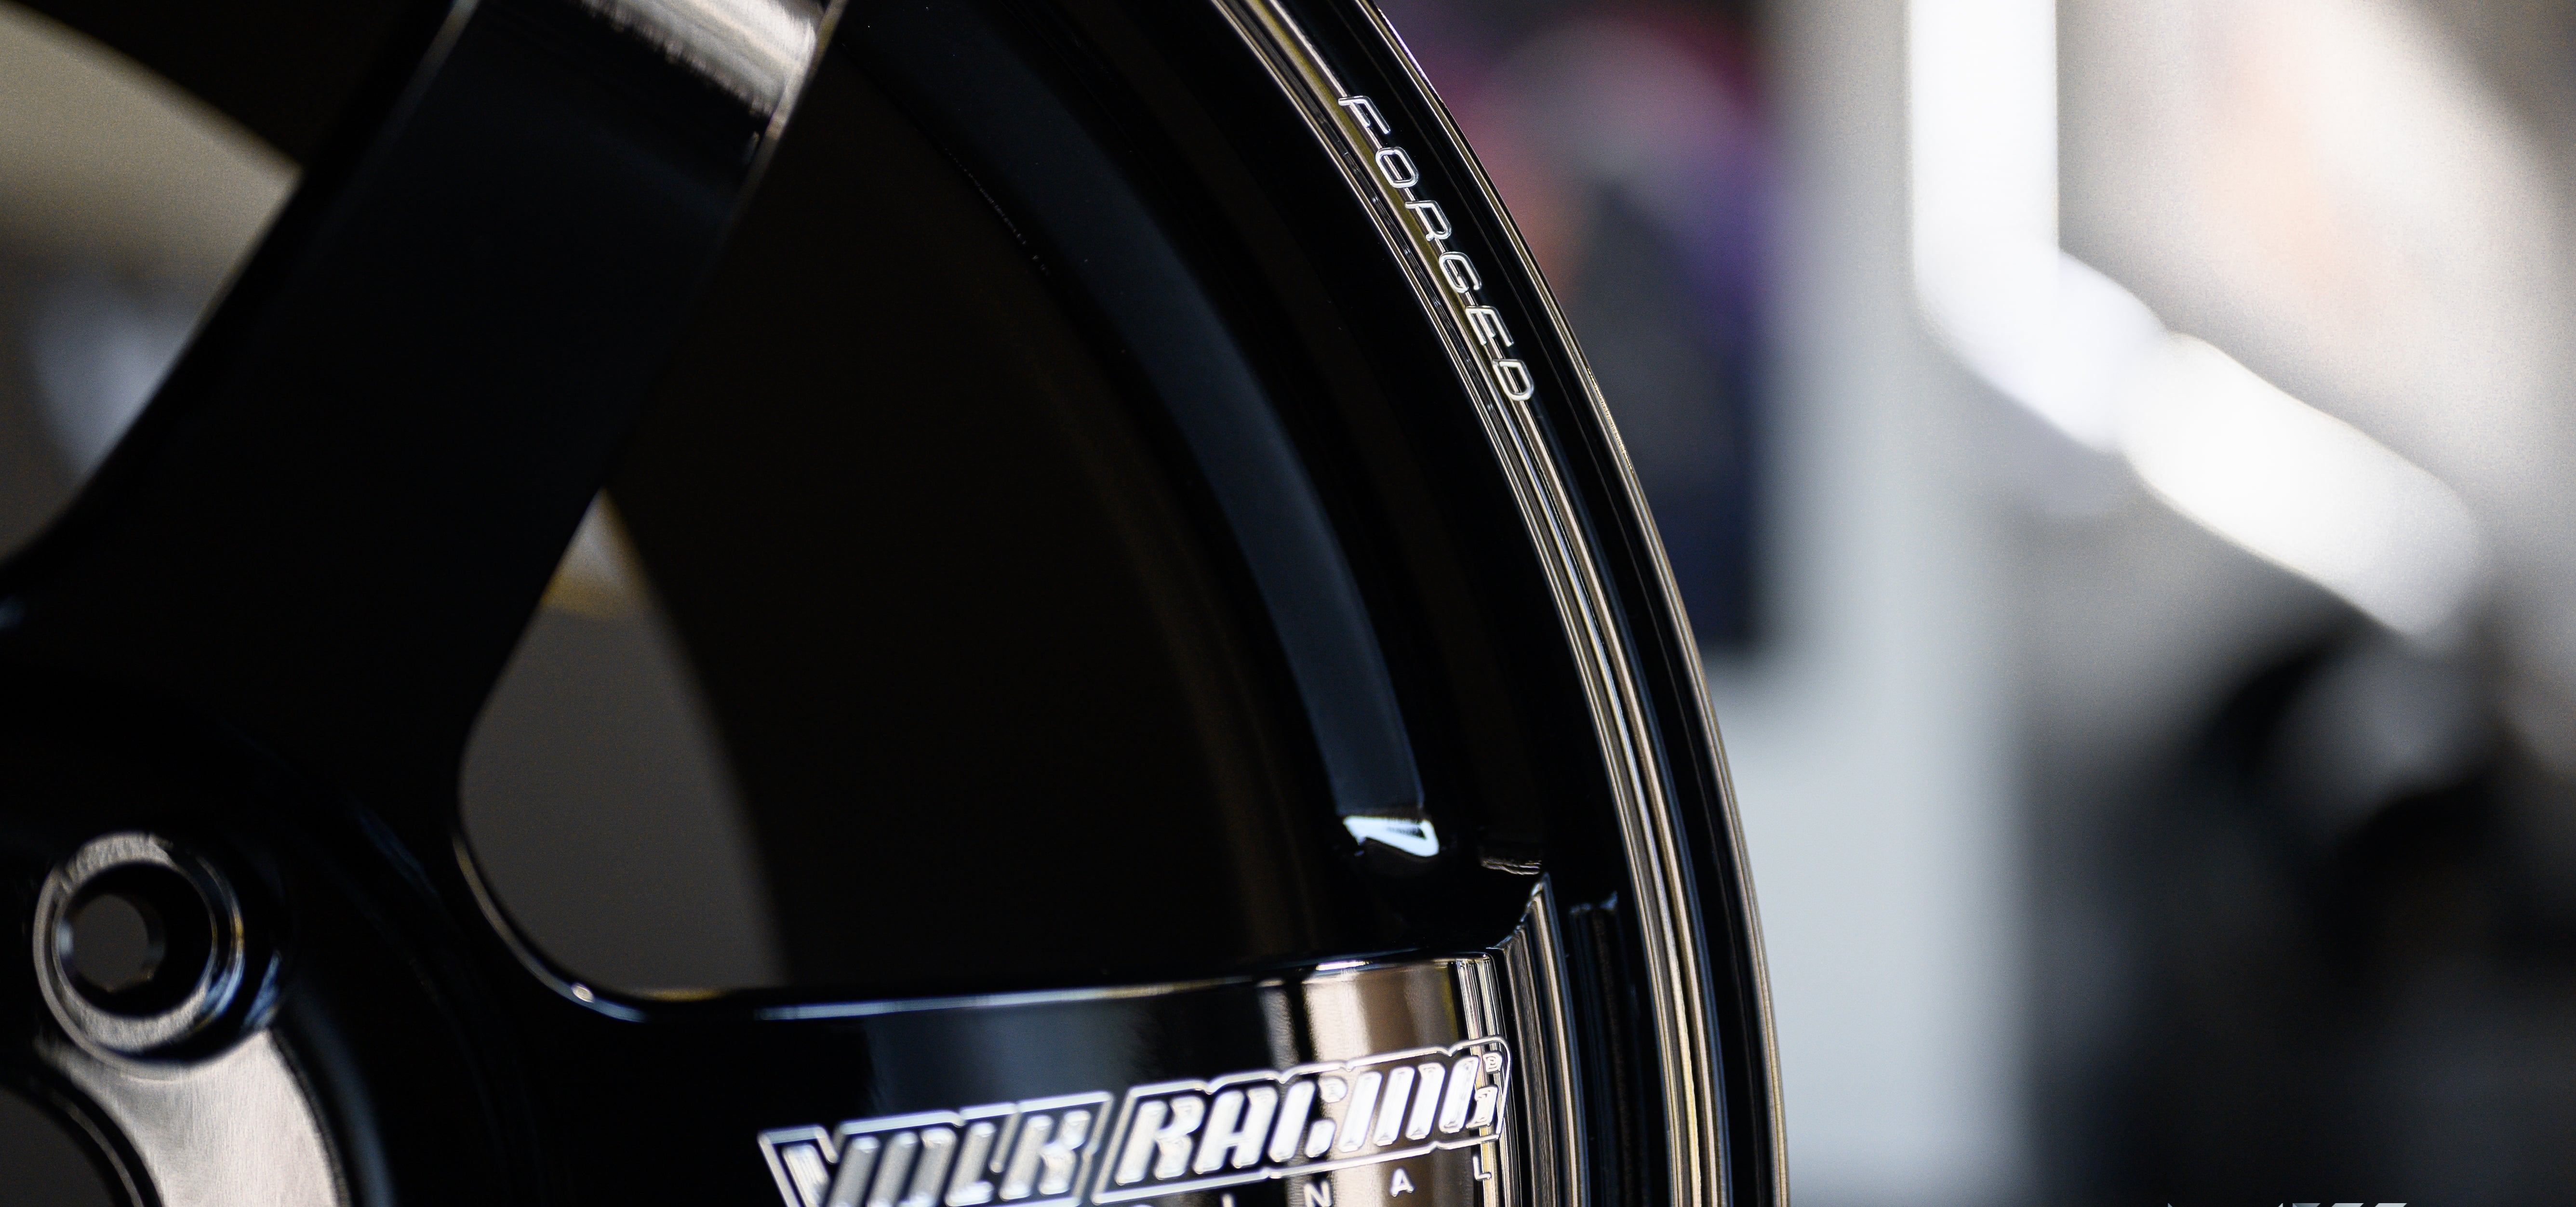 Volk Racing TE37 Saga S-Plus 18" - Premium Wheels from Volk Racing - From just $4250.00! Shop now at MK MOTORSPORTS